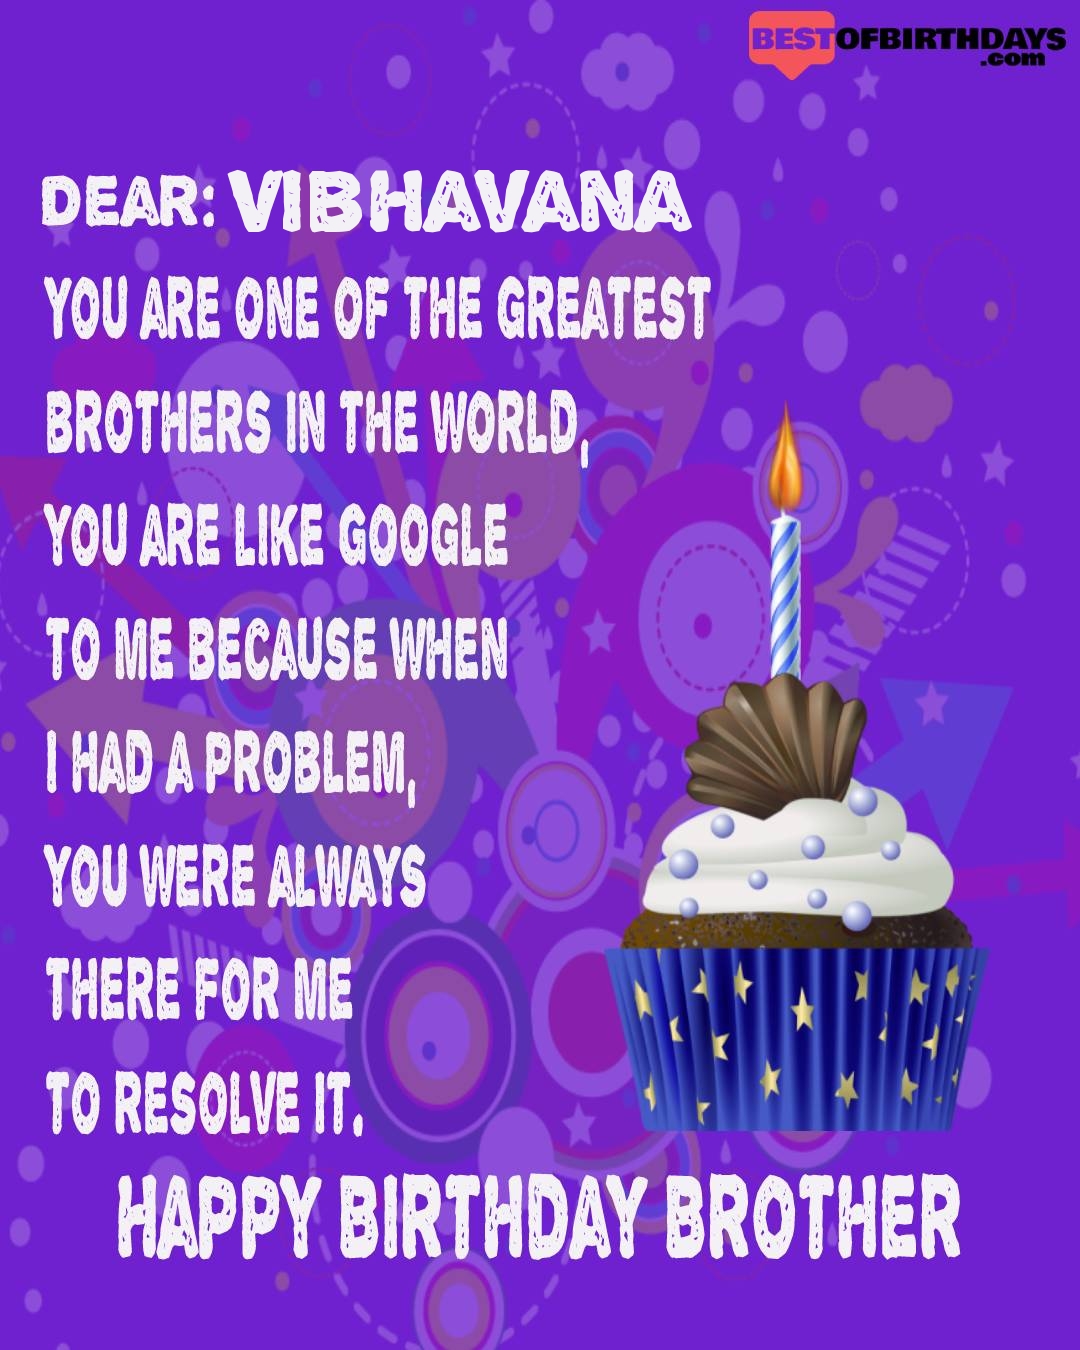 Happy birthday vibhavana bhai brother bro